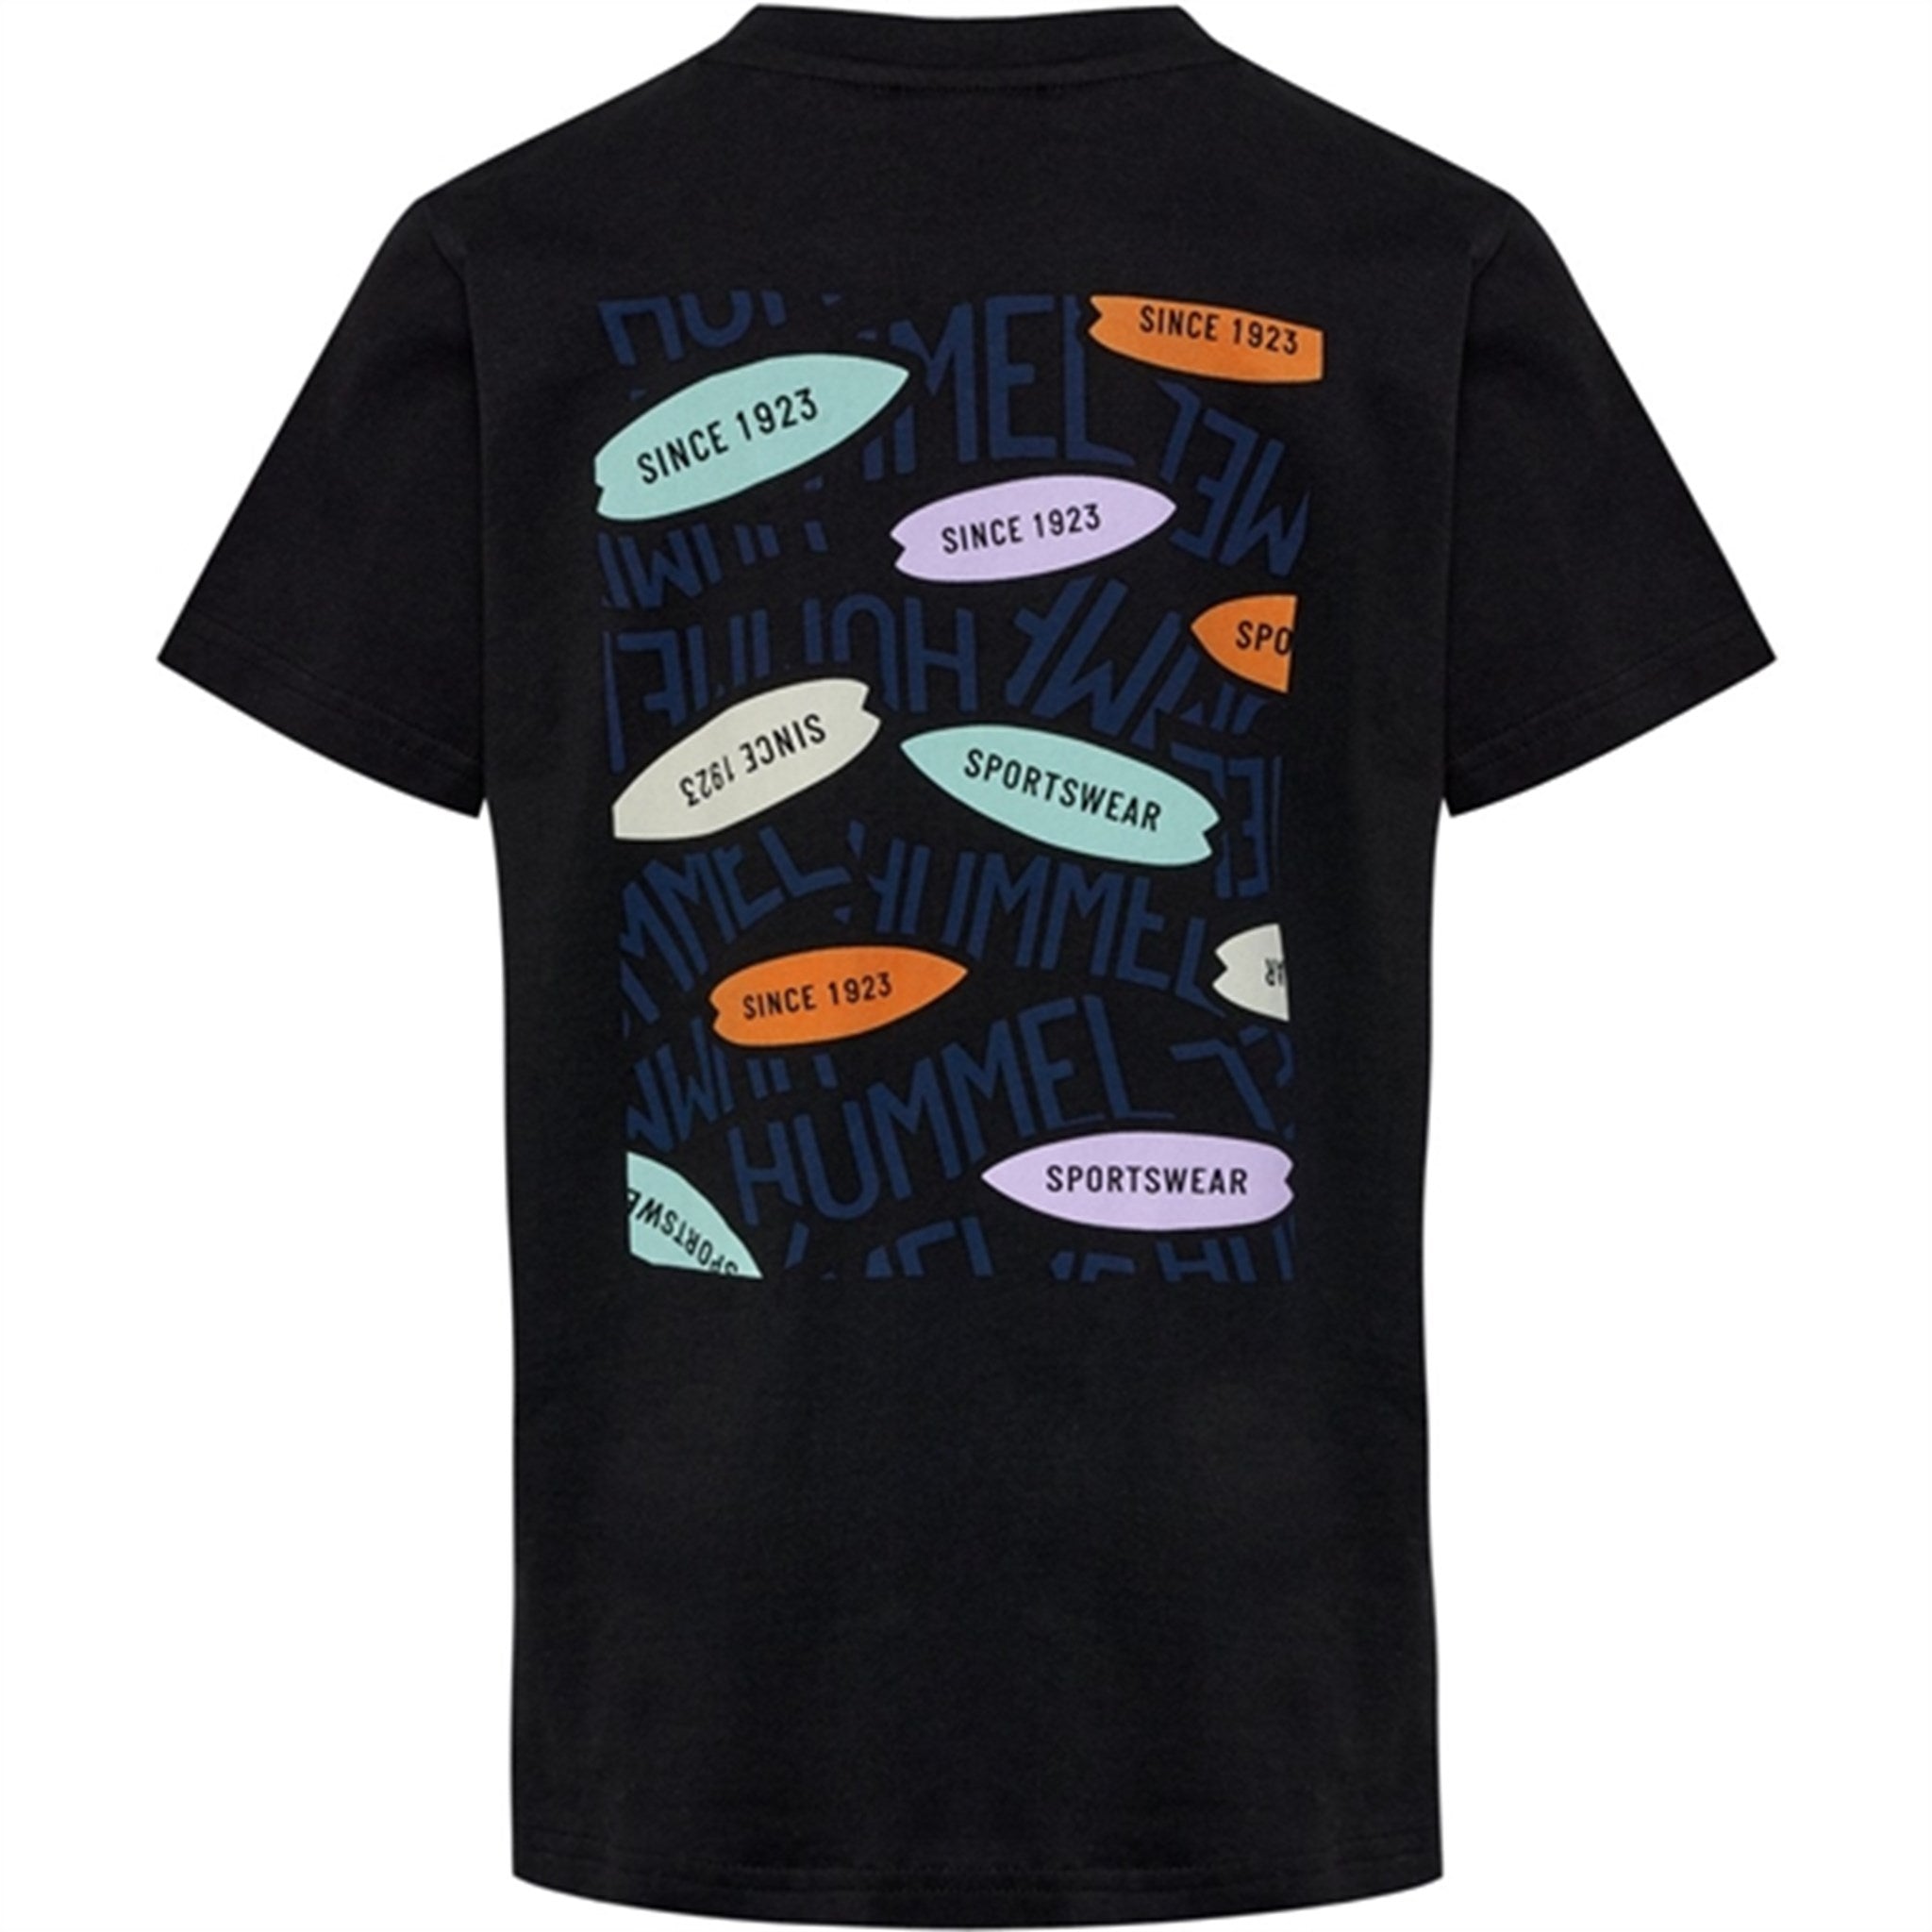 Hummel Black Surf T-Shirt 4